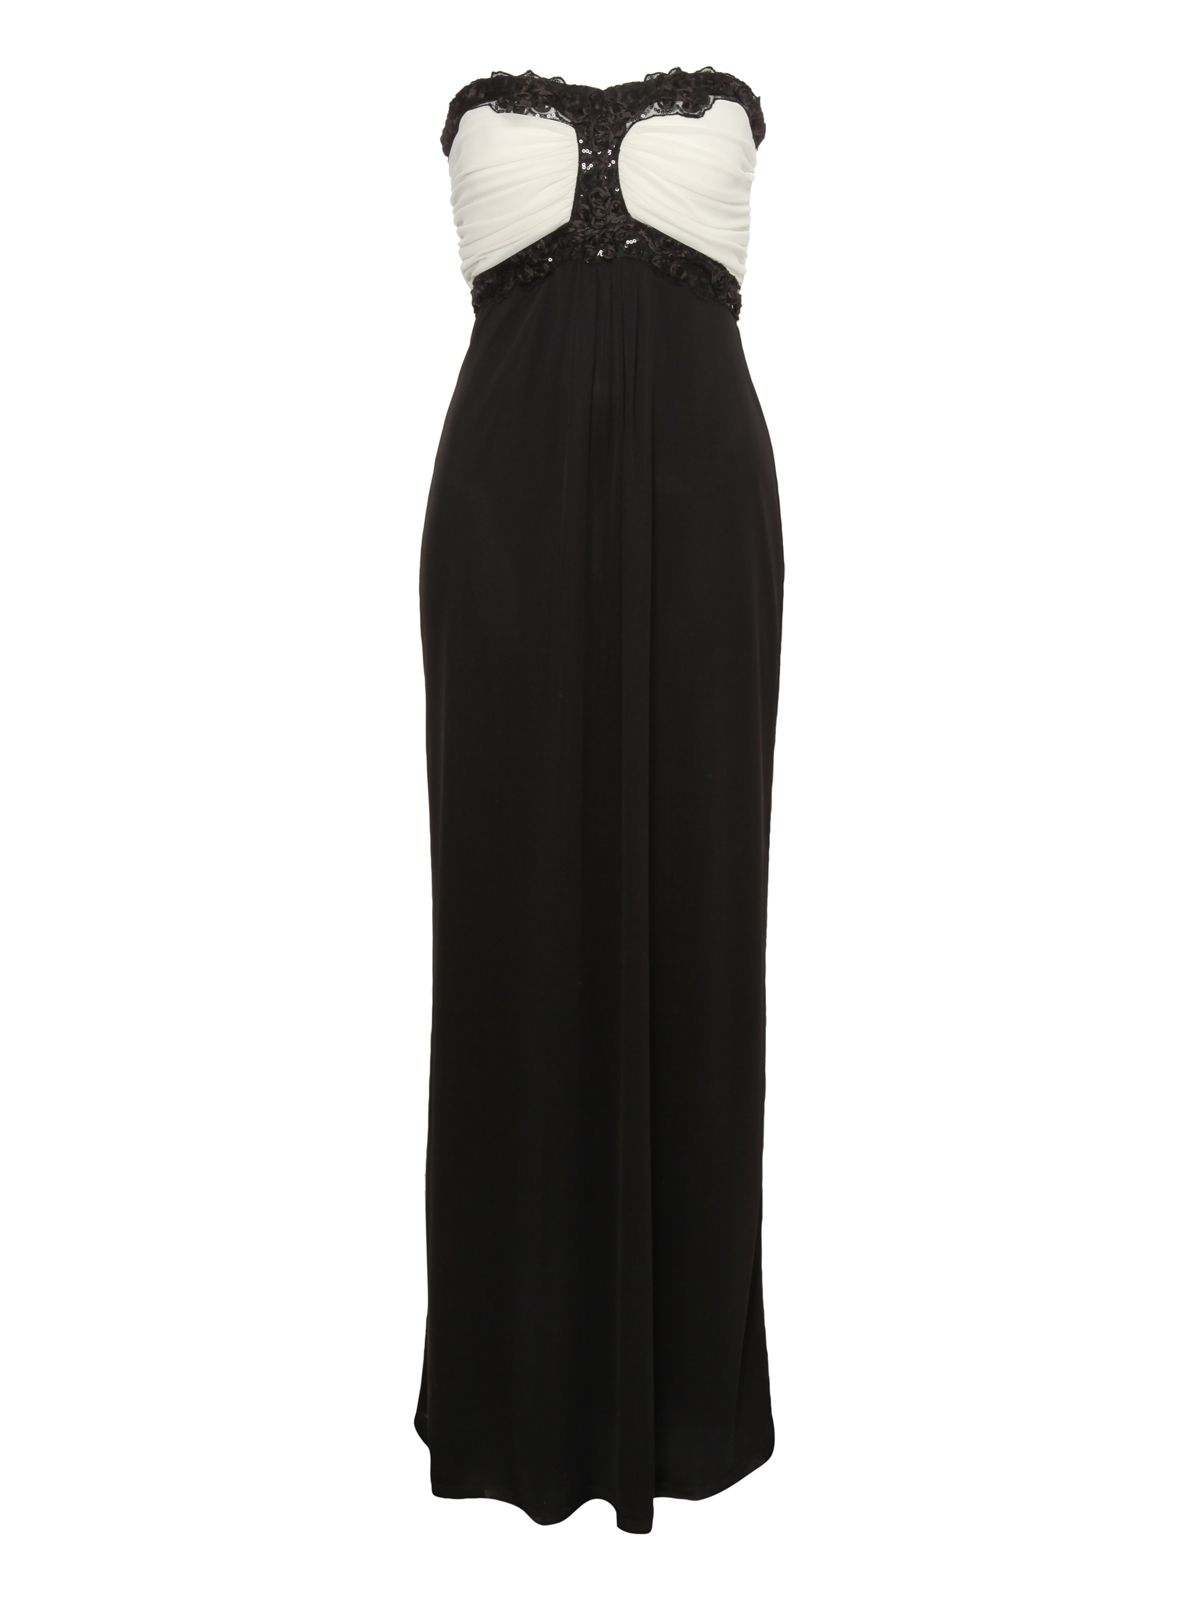 Jane Norman Embellished Monochrome Maxi Dress in Black | Lyst